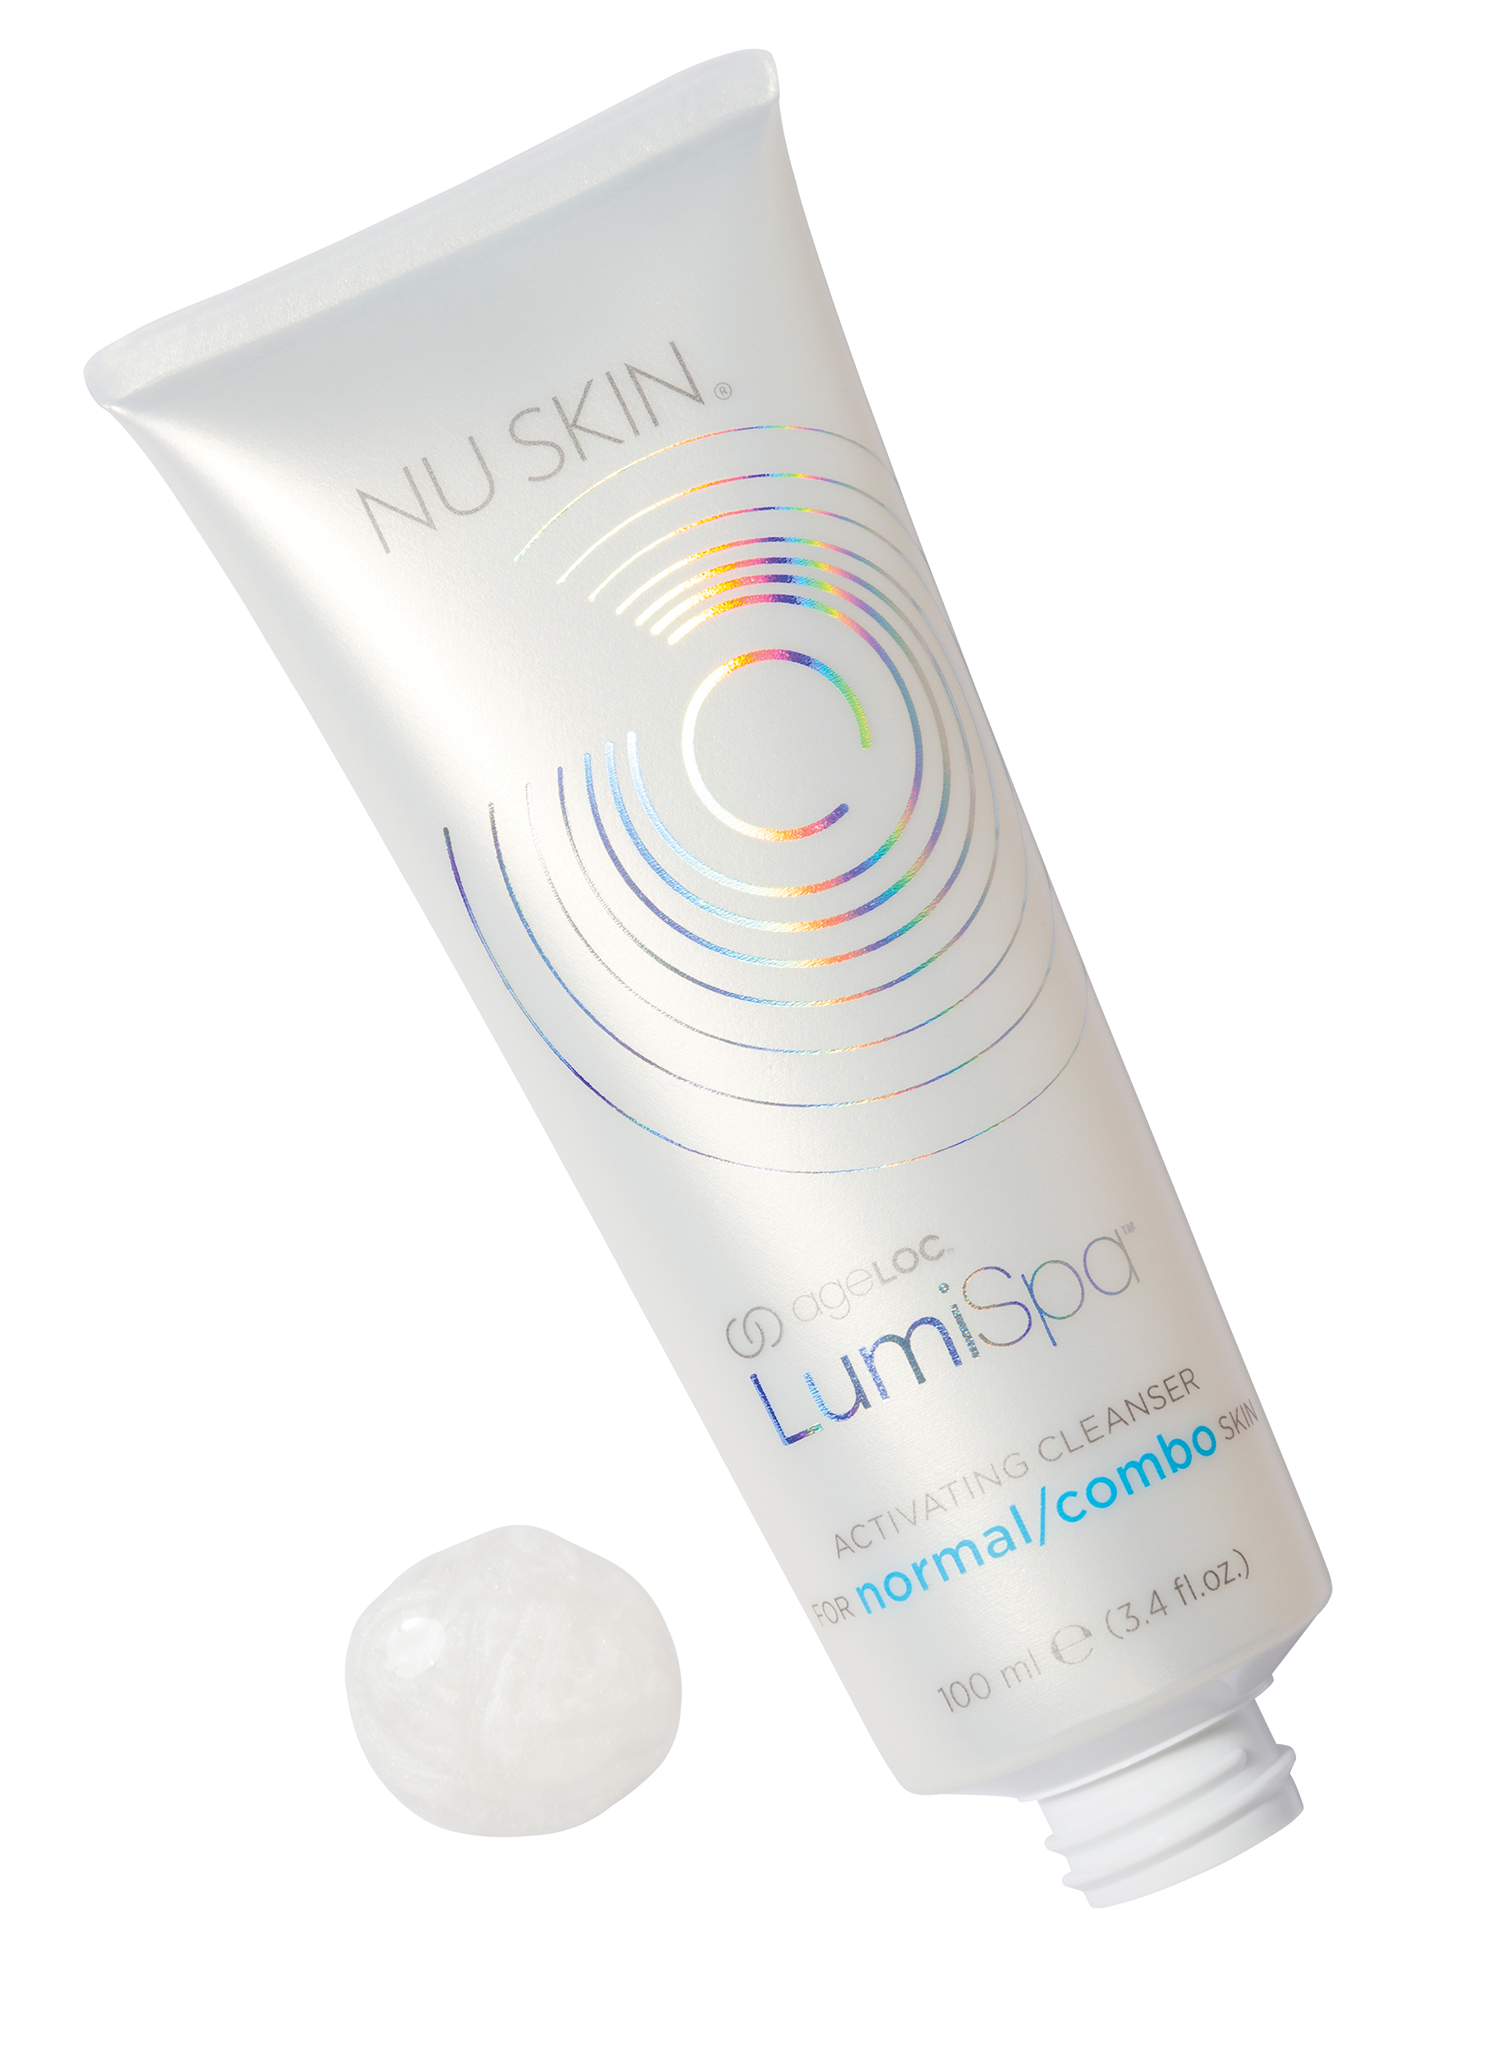 Skin Care & Facial Treatment System | ageLOC LumiSpa Brunei